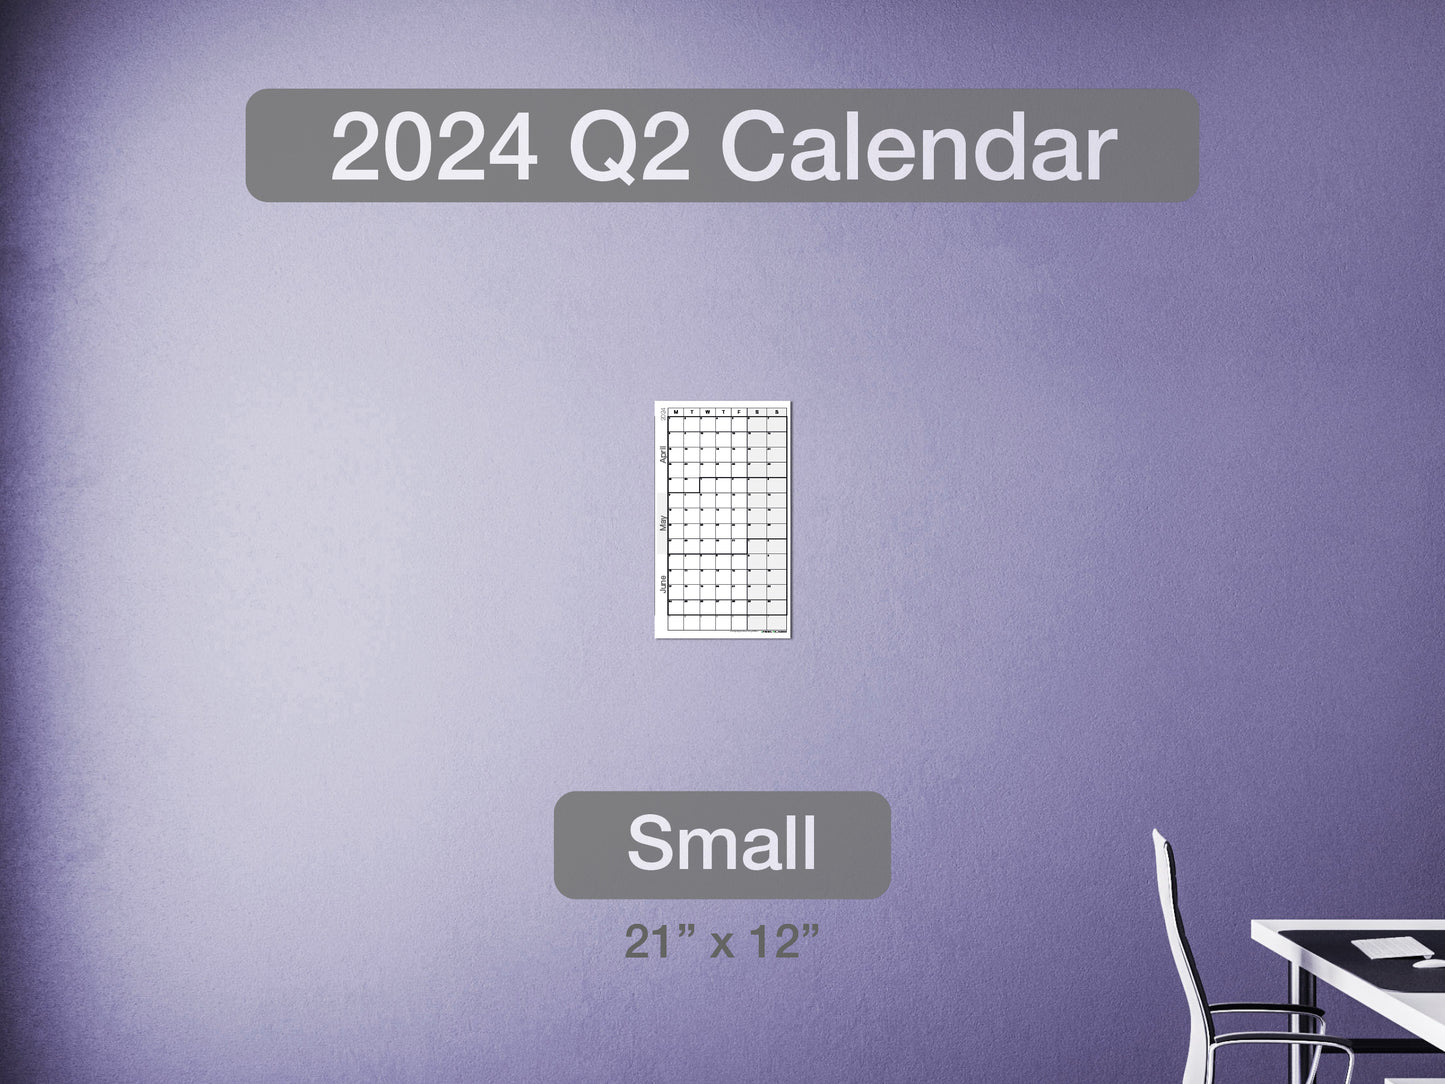 2024 Q2 Calendar Small